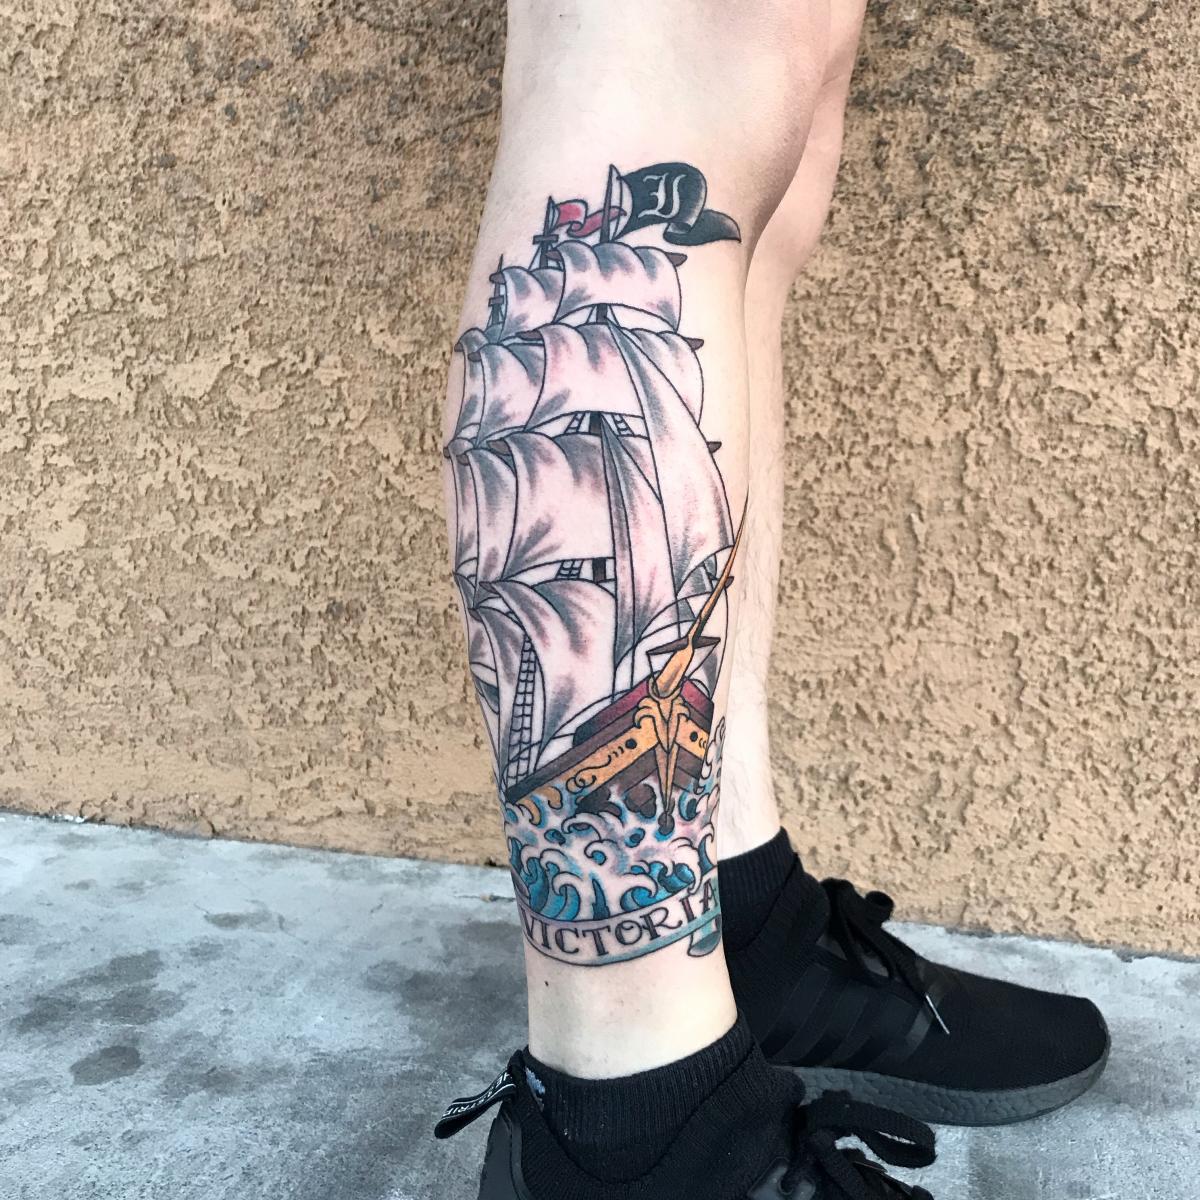 Ship tattoo by Cameron Kelley at Massive tattoo in Las Vegas NV